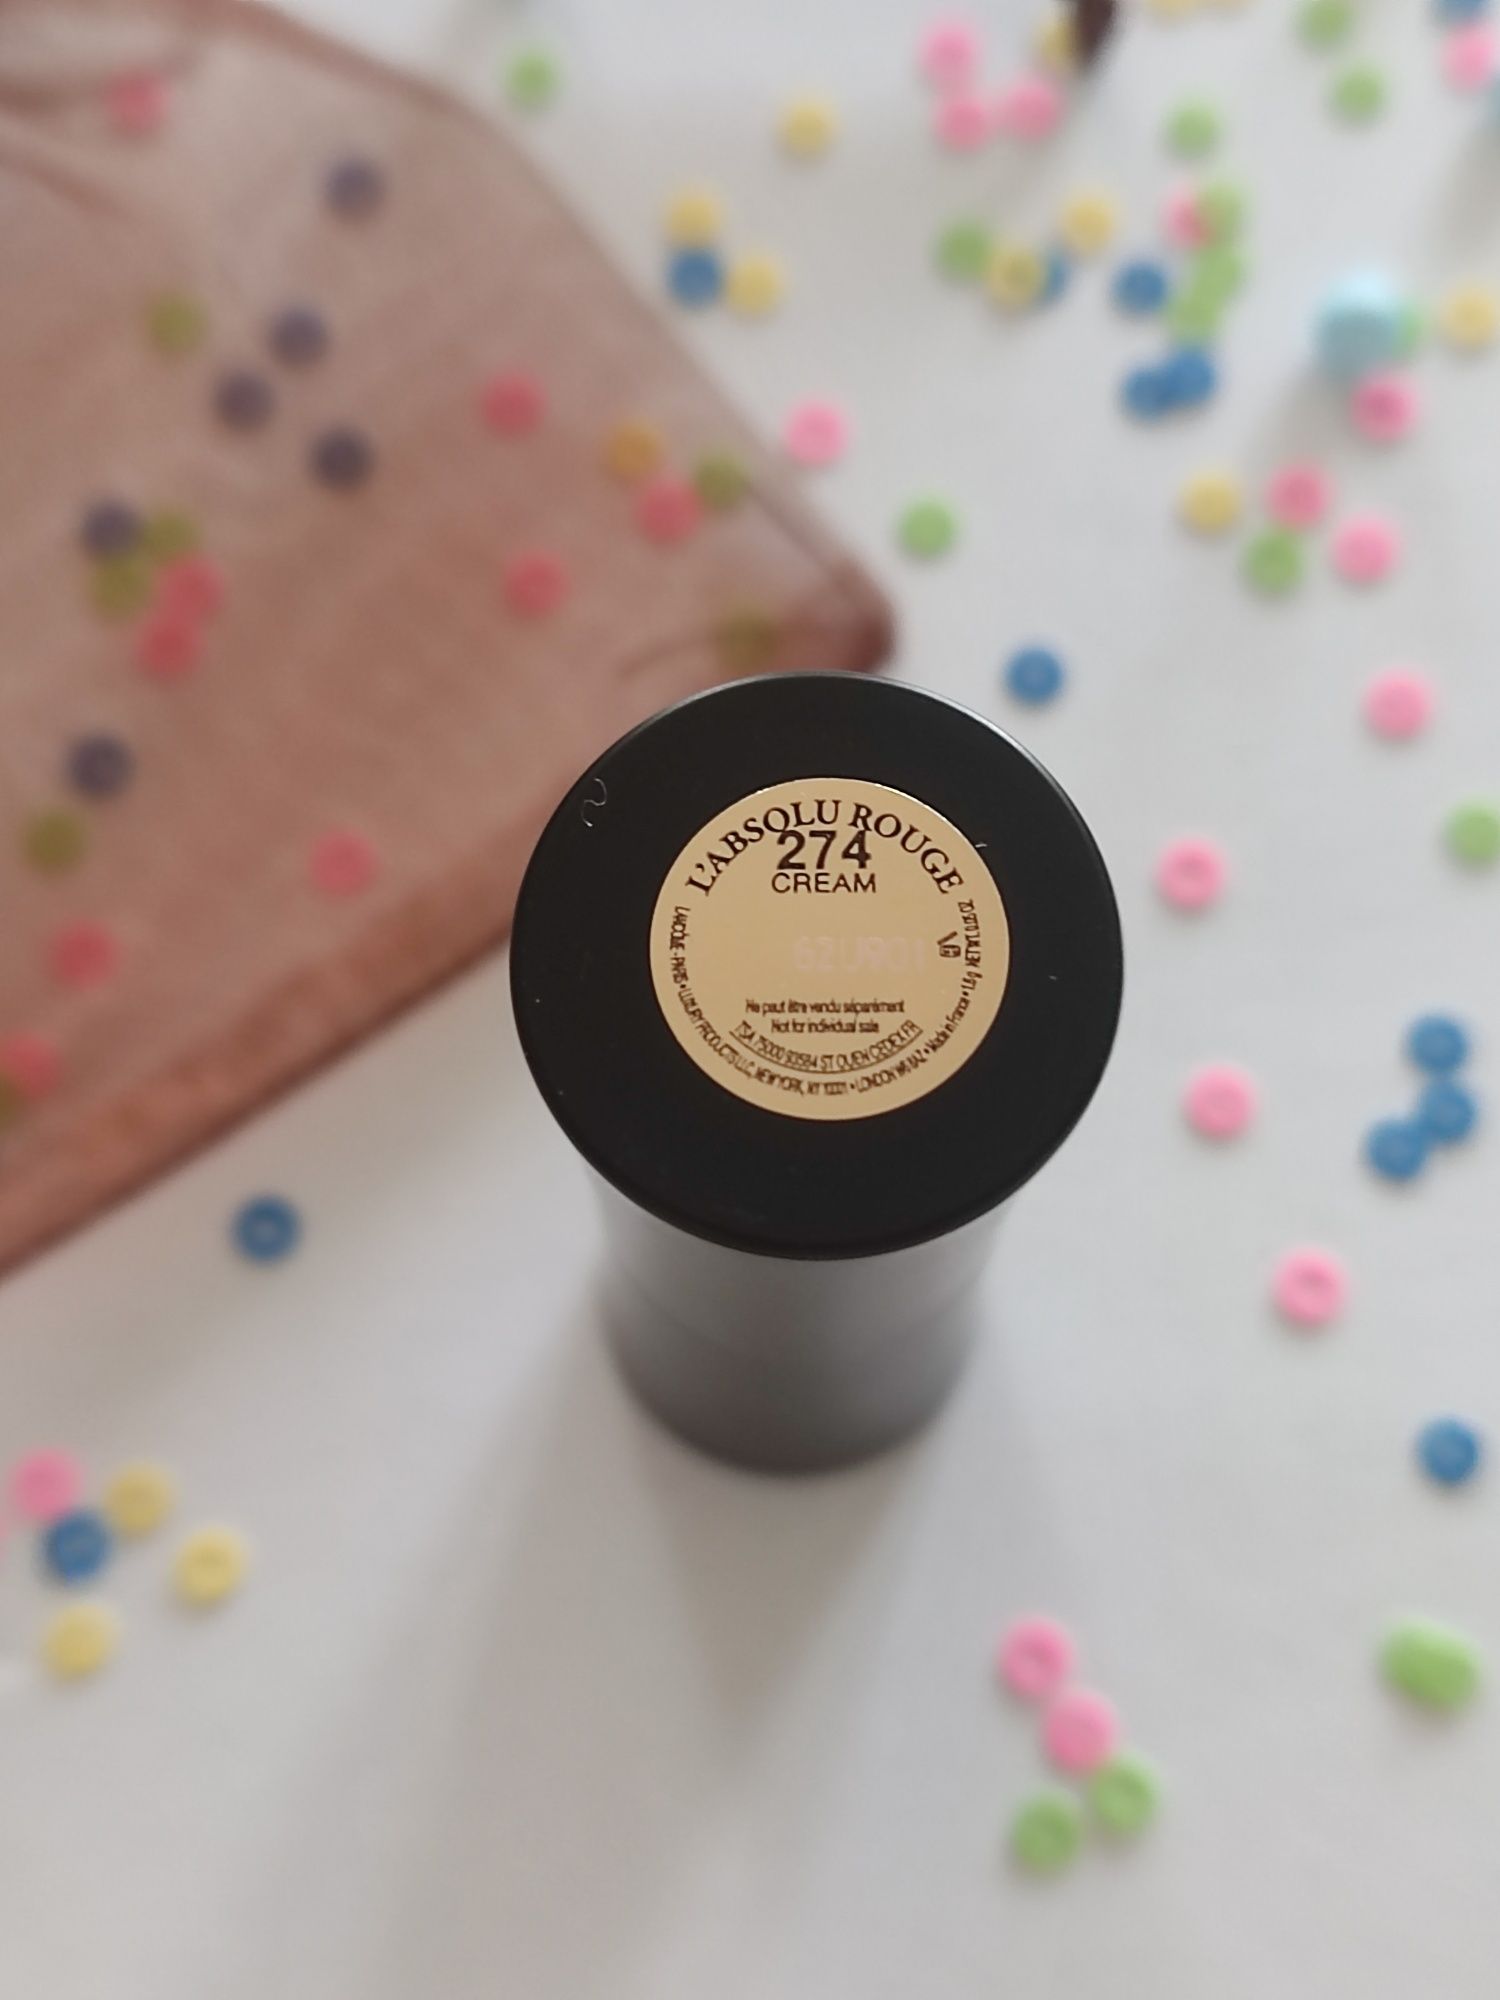 Nowa szminka pomadka do ust Lancome 274 cream Sephora Douglas mini